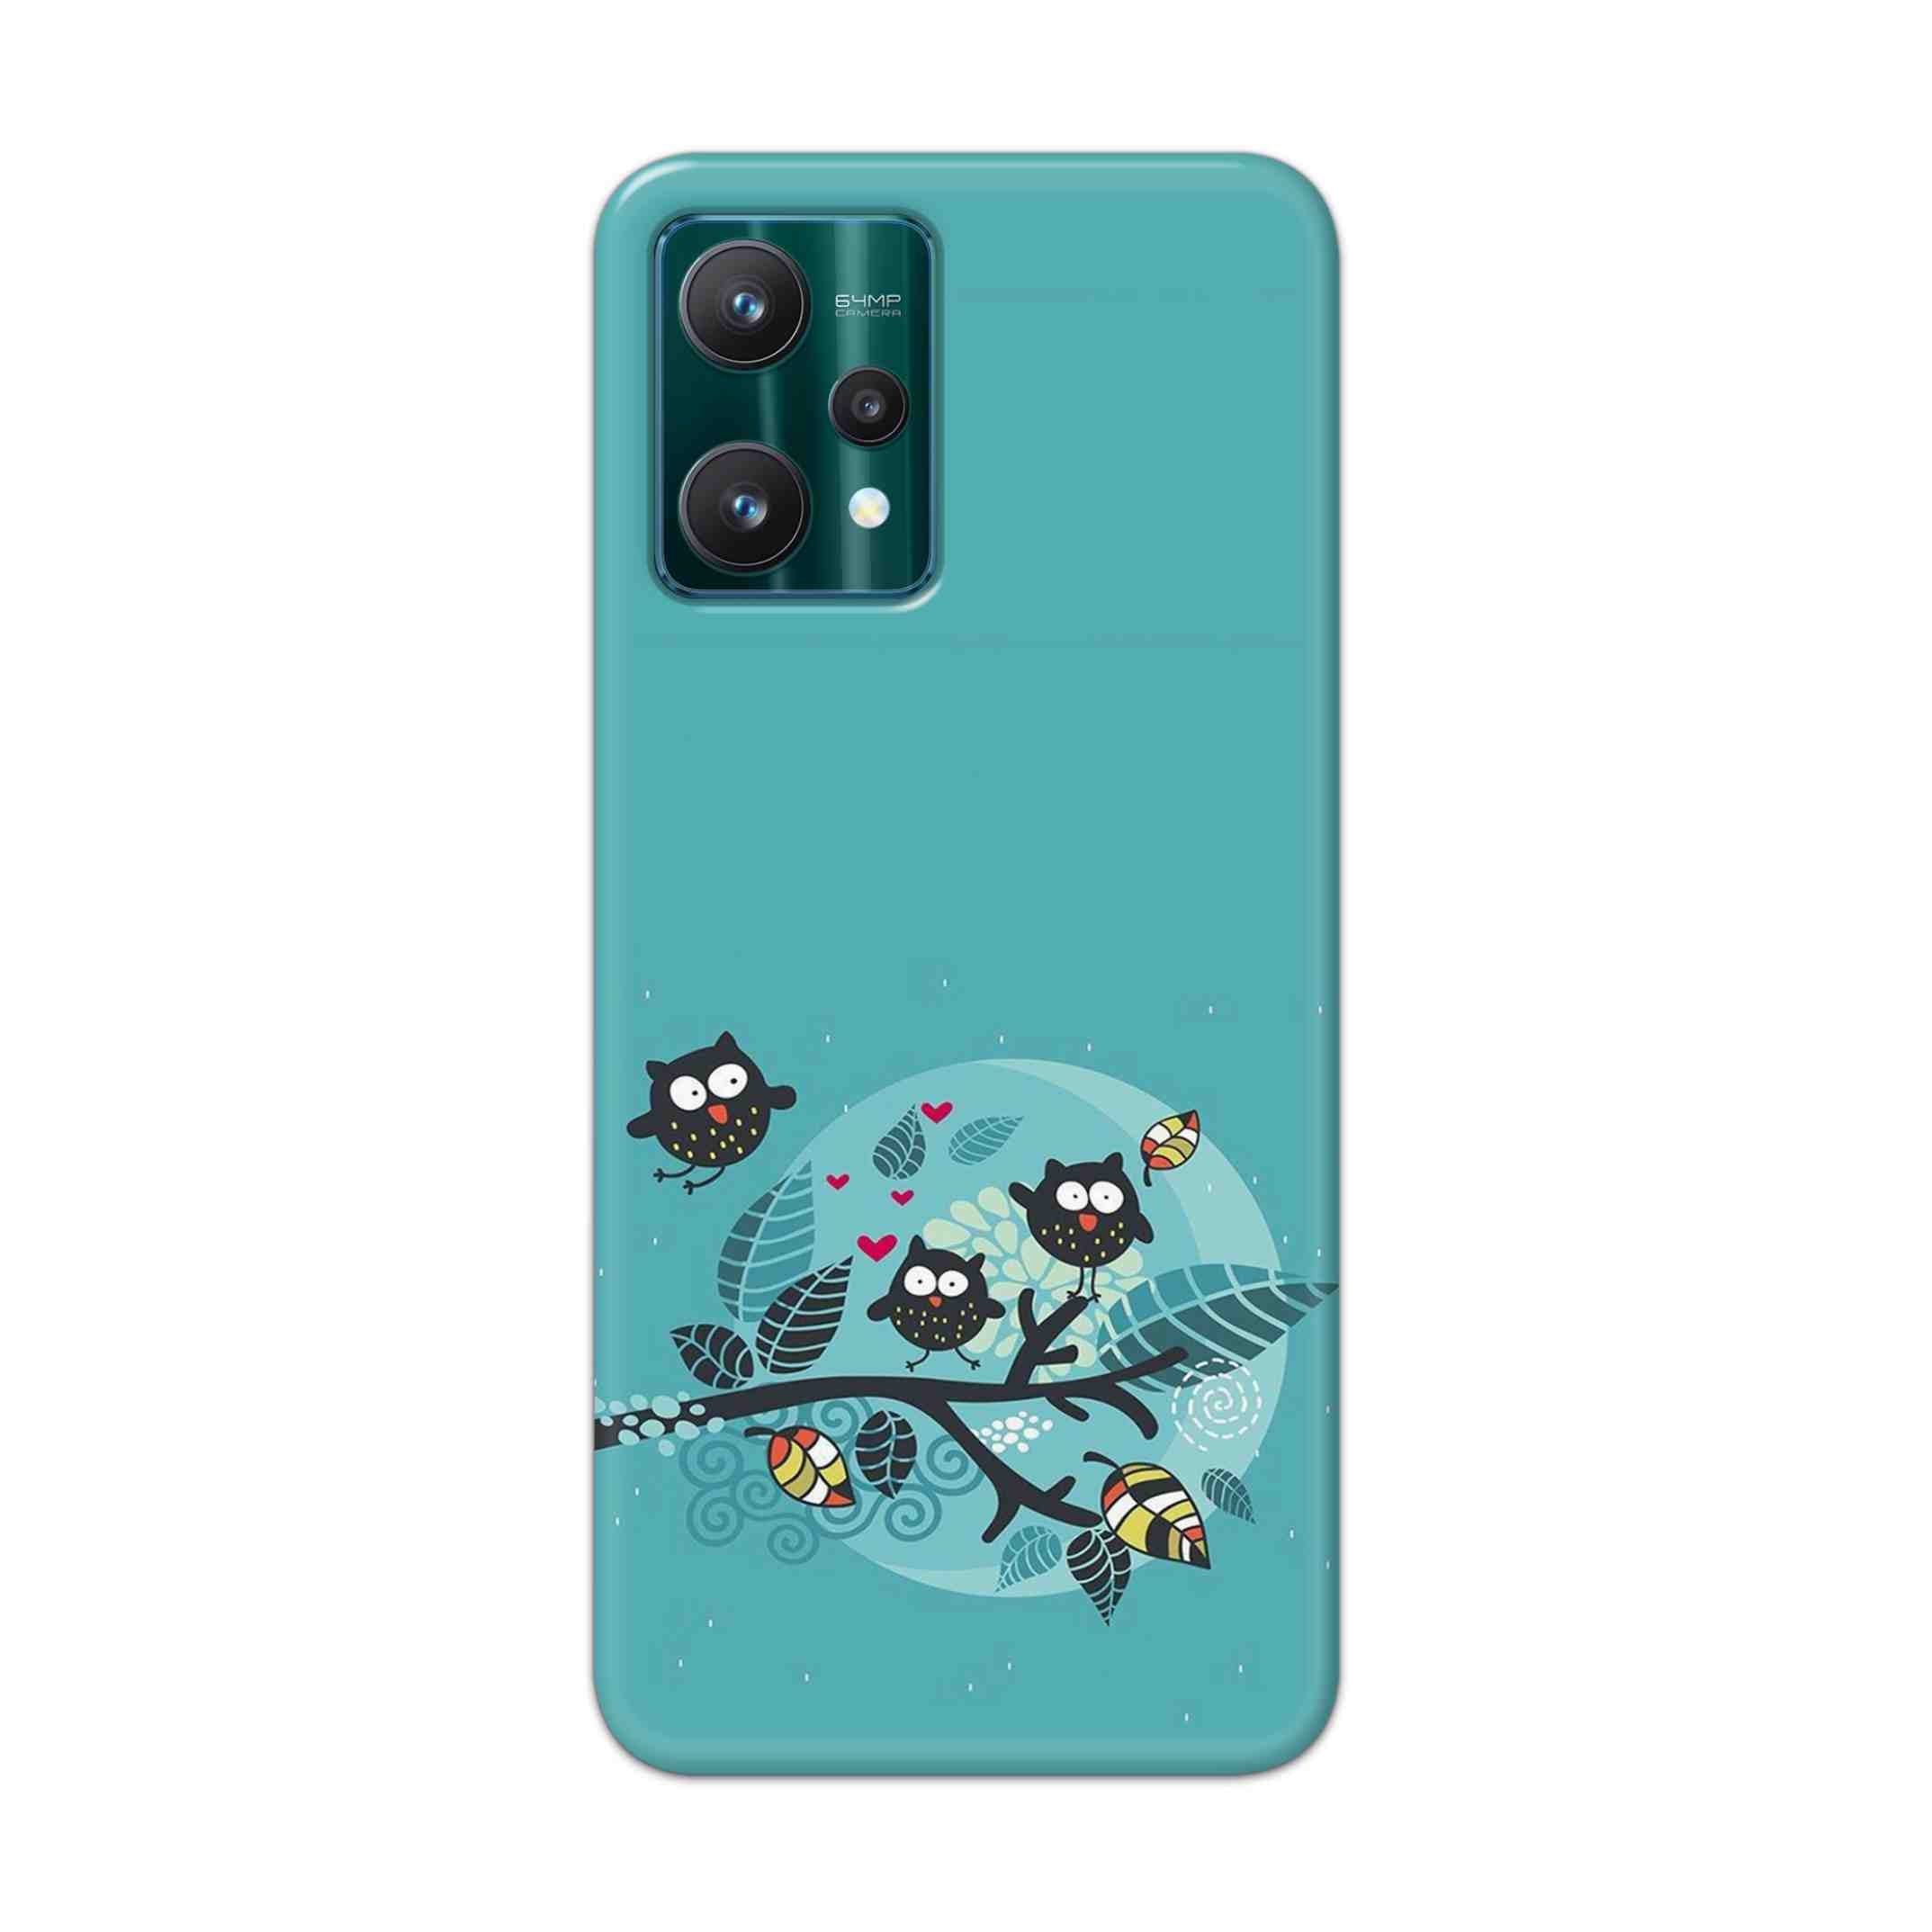 Buy Owl Hard Back Mobile Phone Case Cover For Realme 9 Pro Online